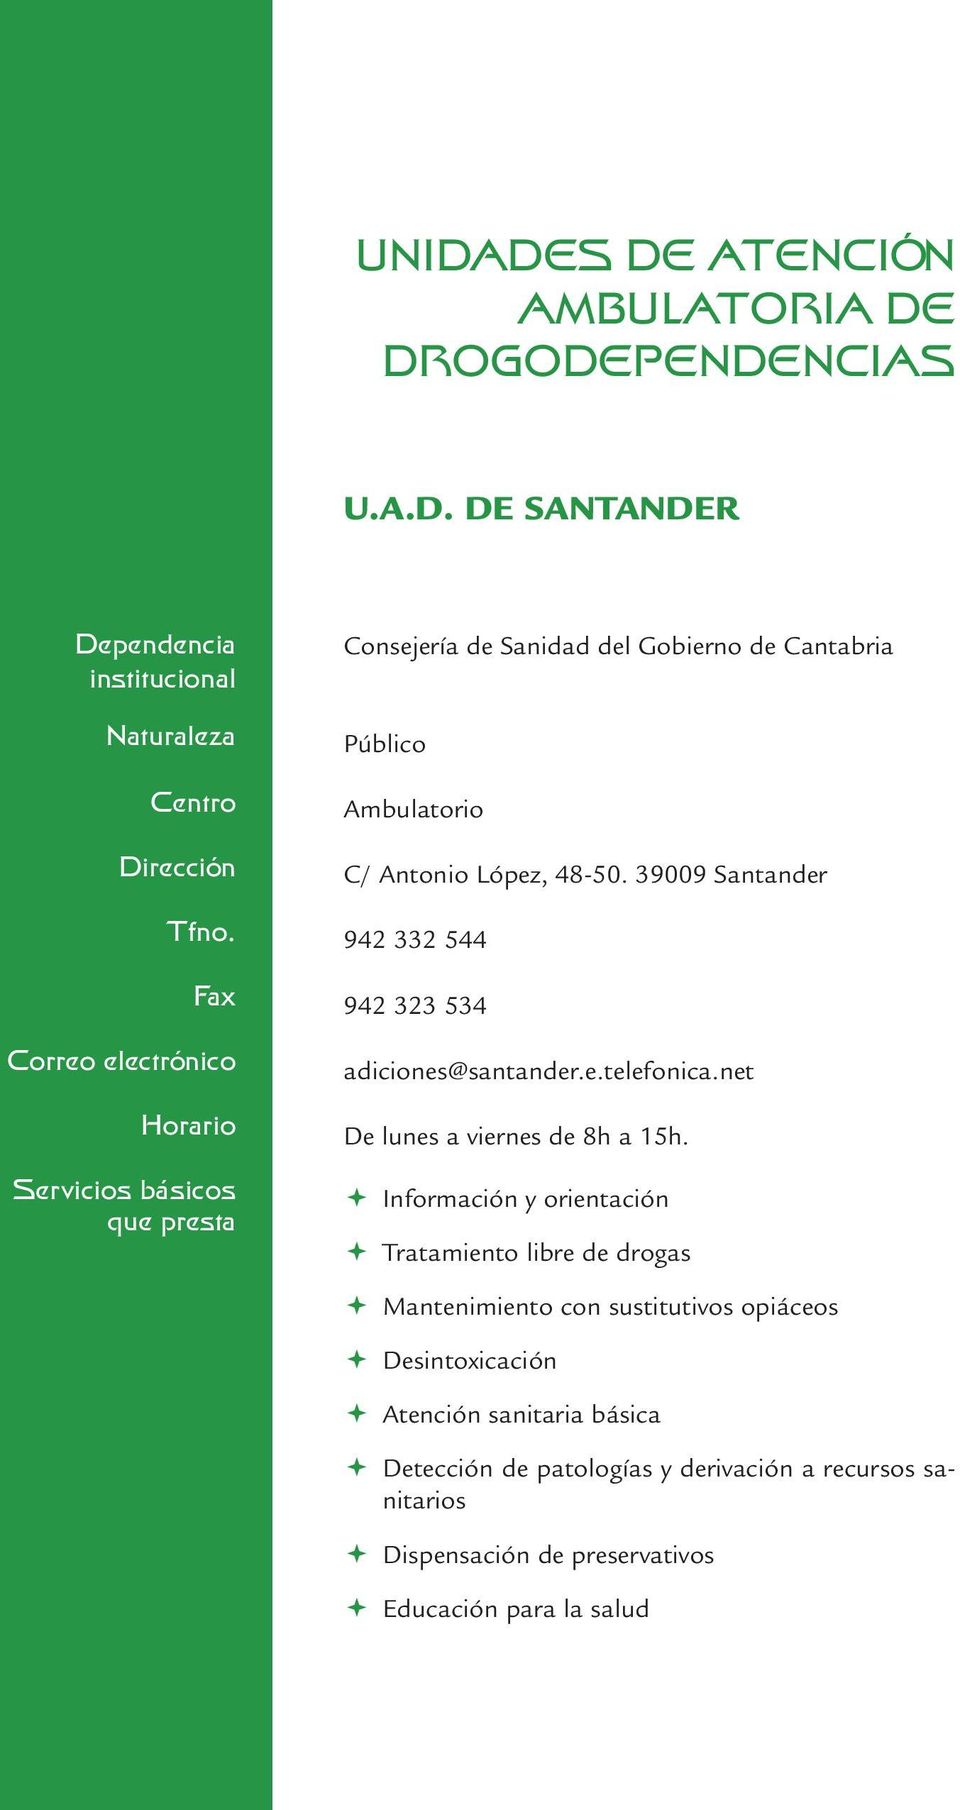 39009 Santander 942 332 544 942 323 534 adiciones@santander.e.telefonica.net De lunes a viernes de 8h a 15h.